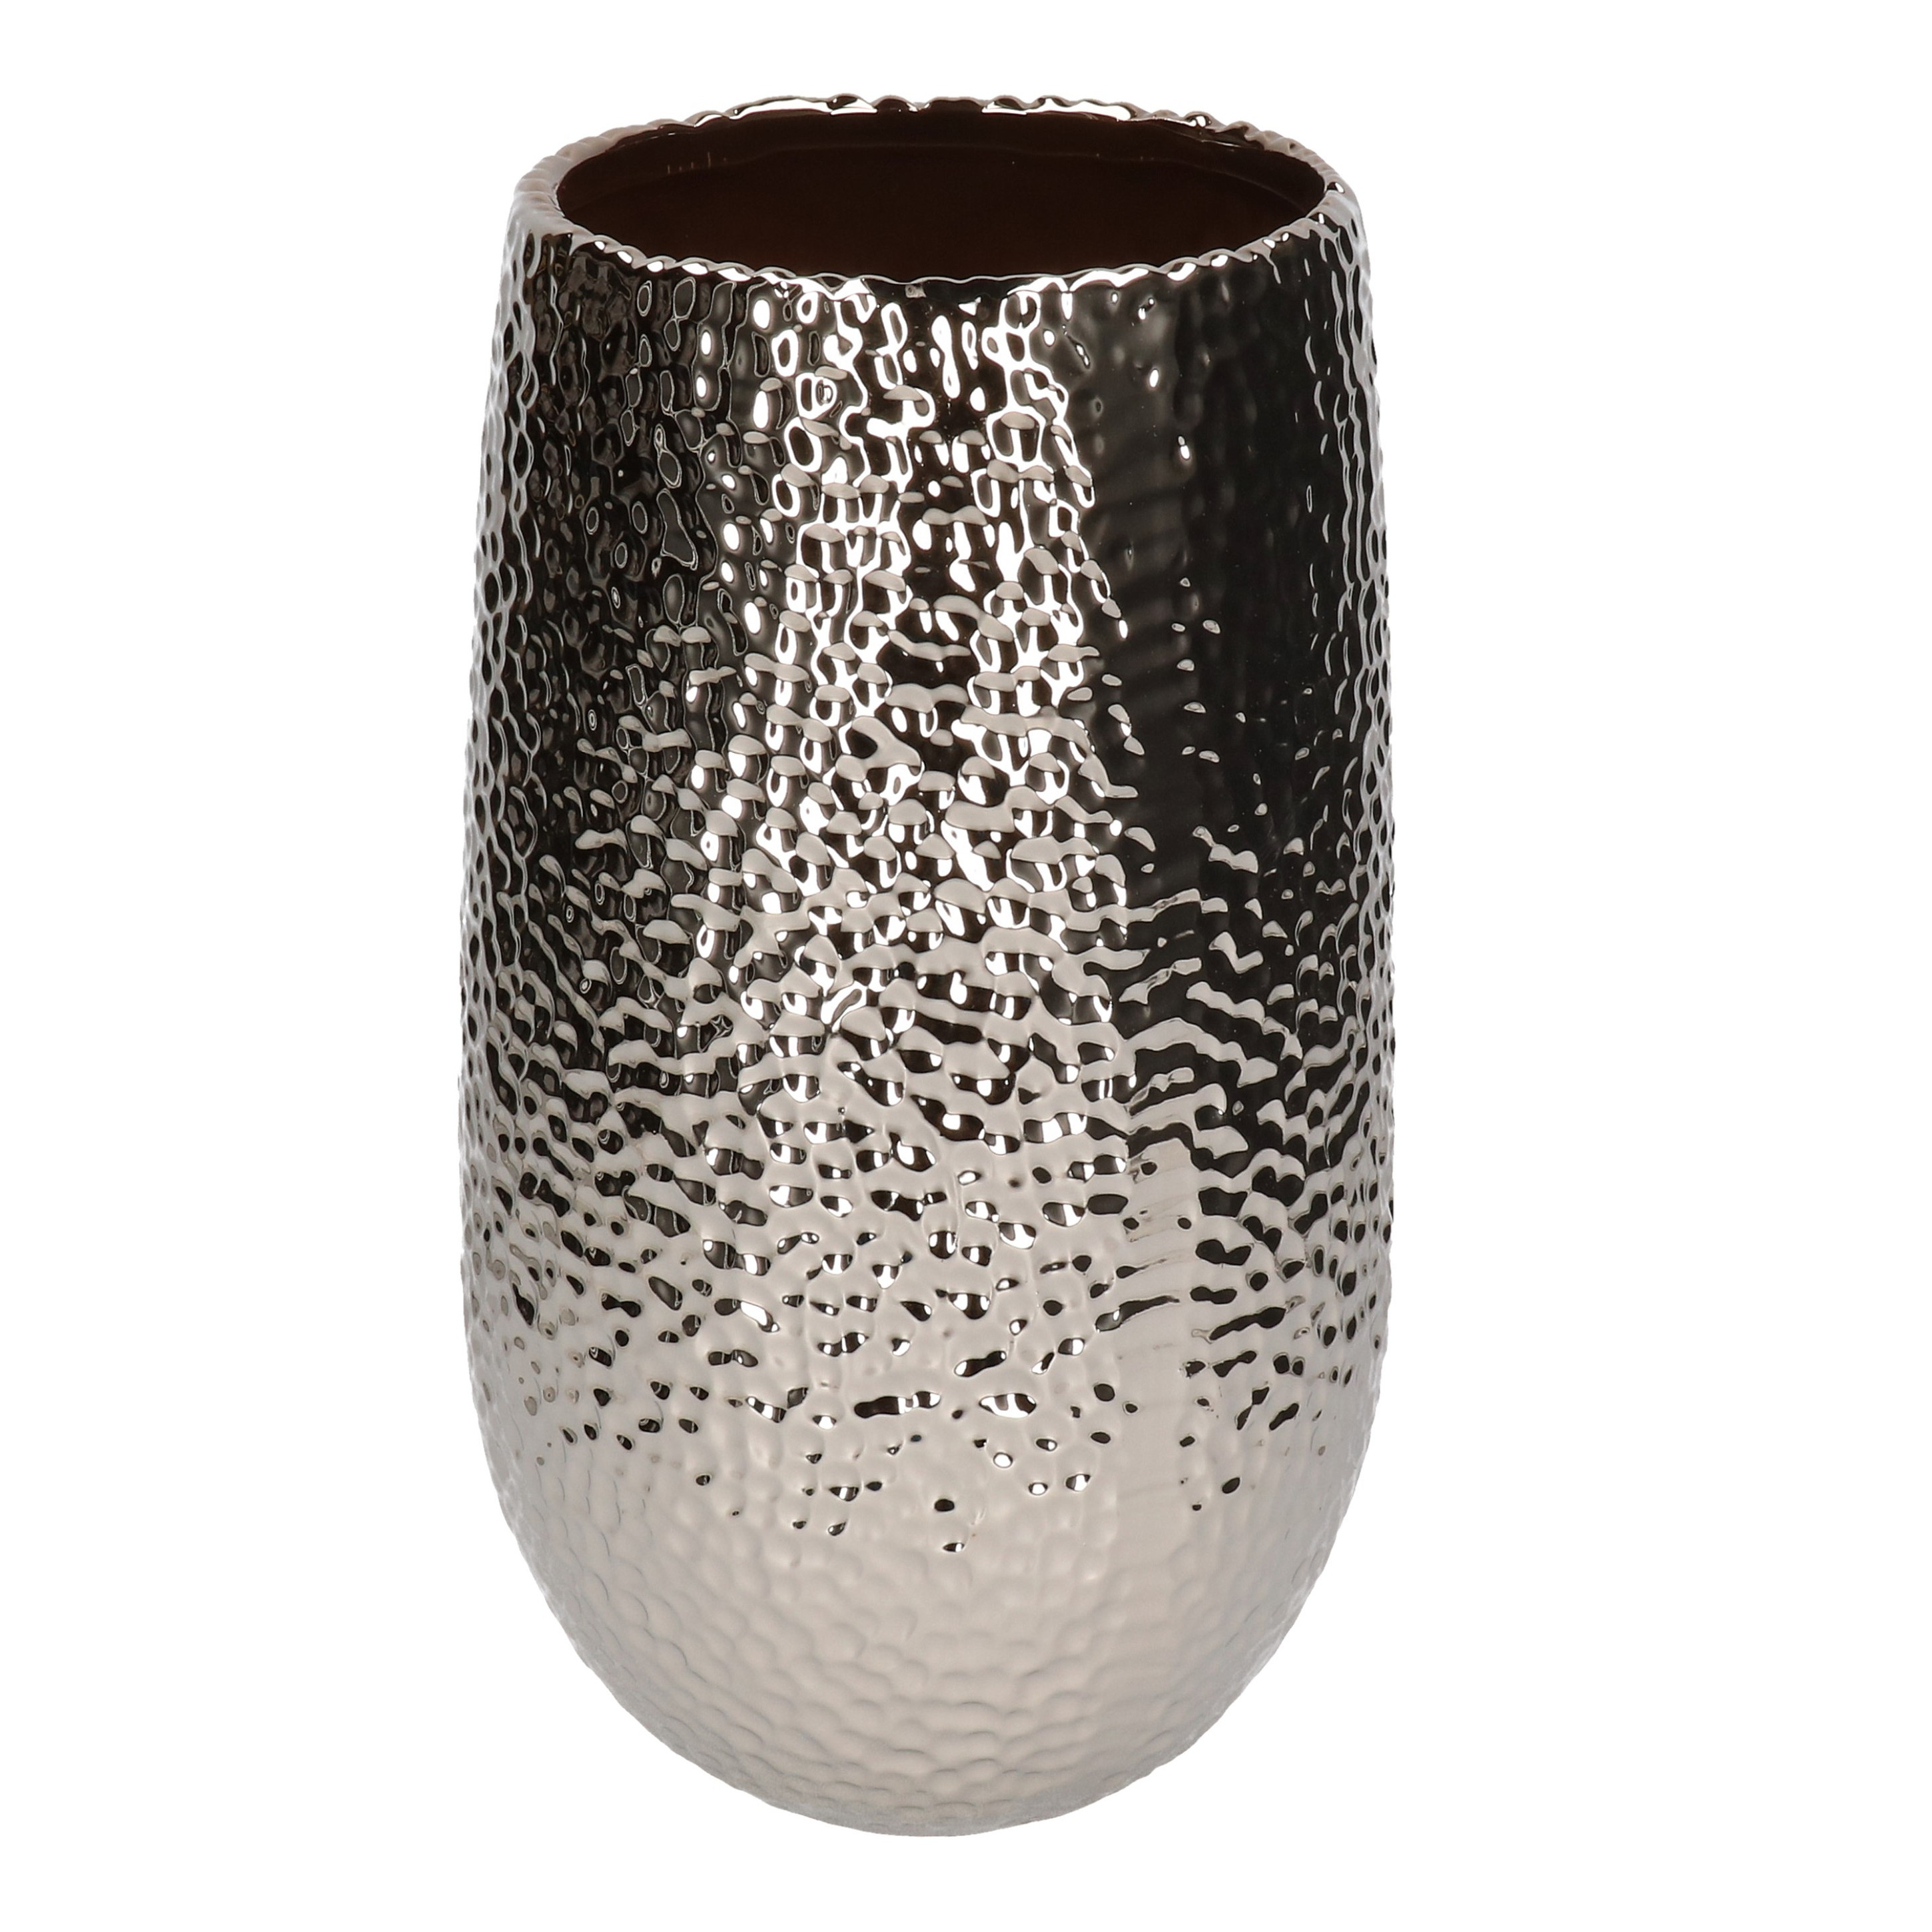 Cilinder vaas / bloemenvaas zilver 31 cm